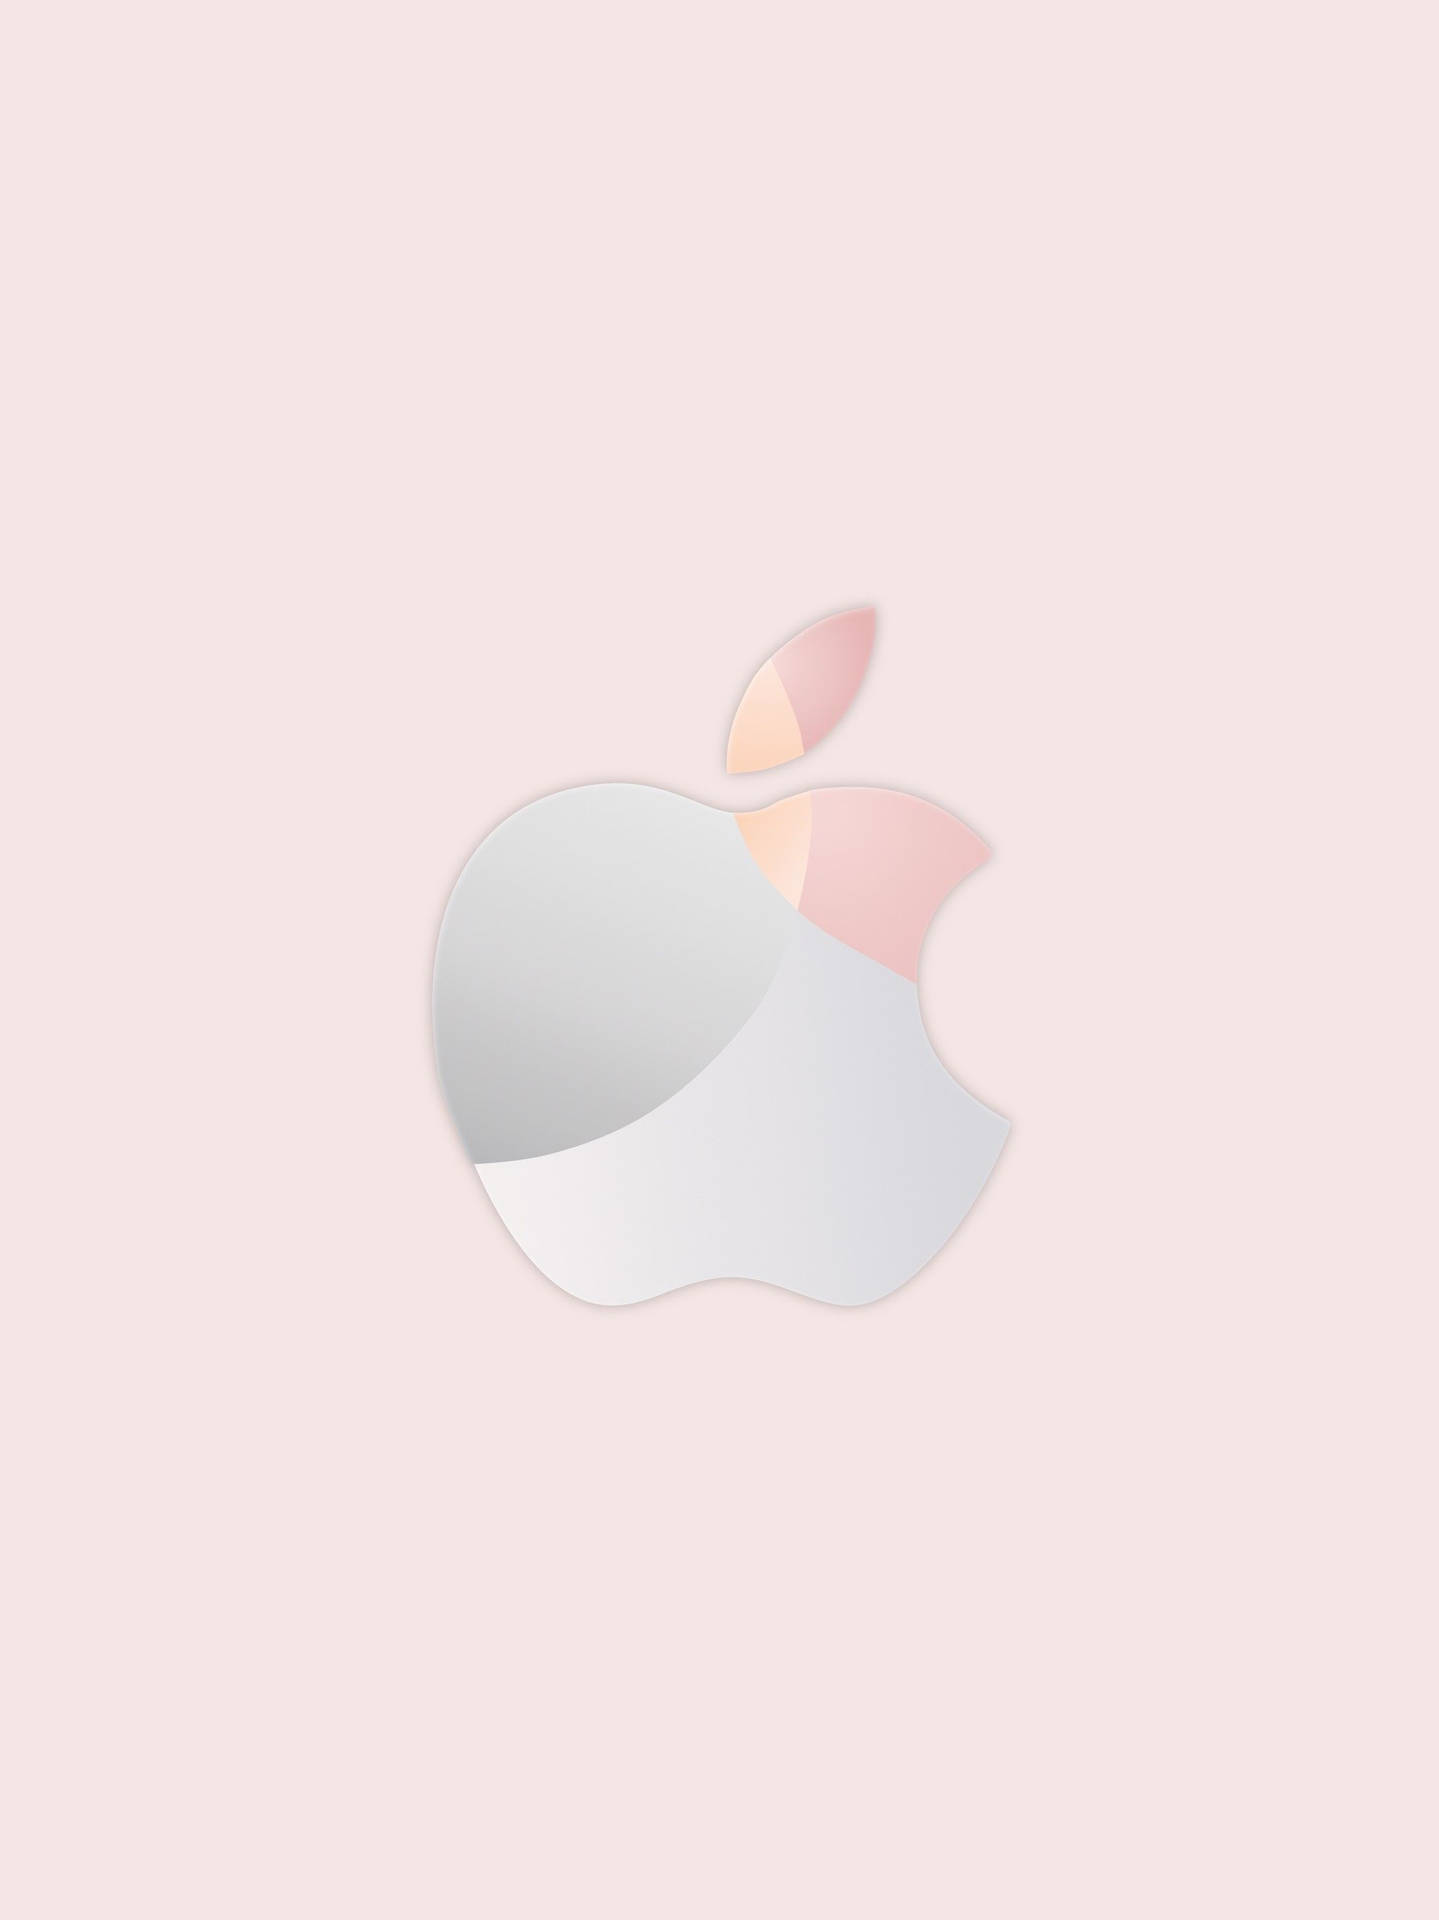 Rose Gold Ipad Simple Apple Logo Background